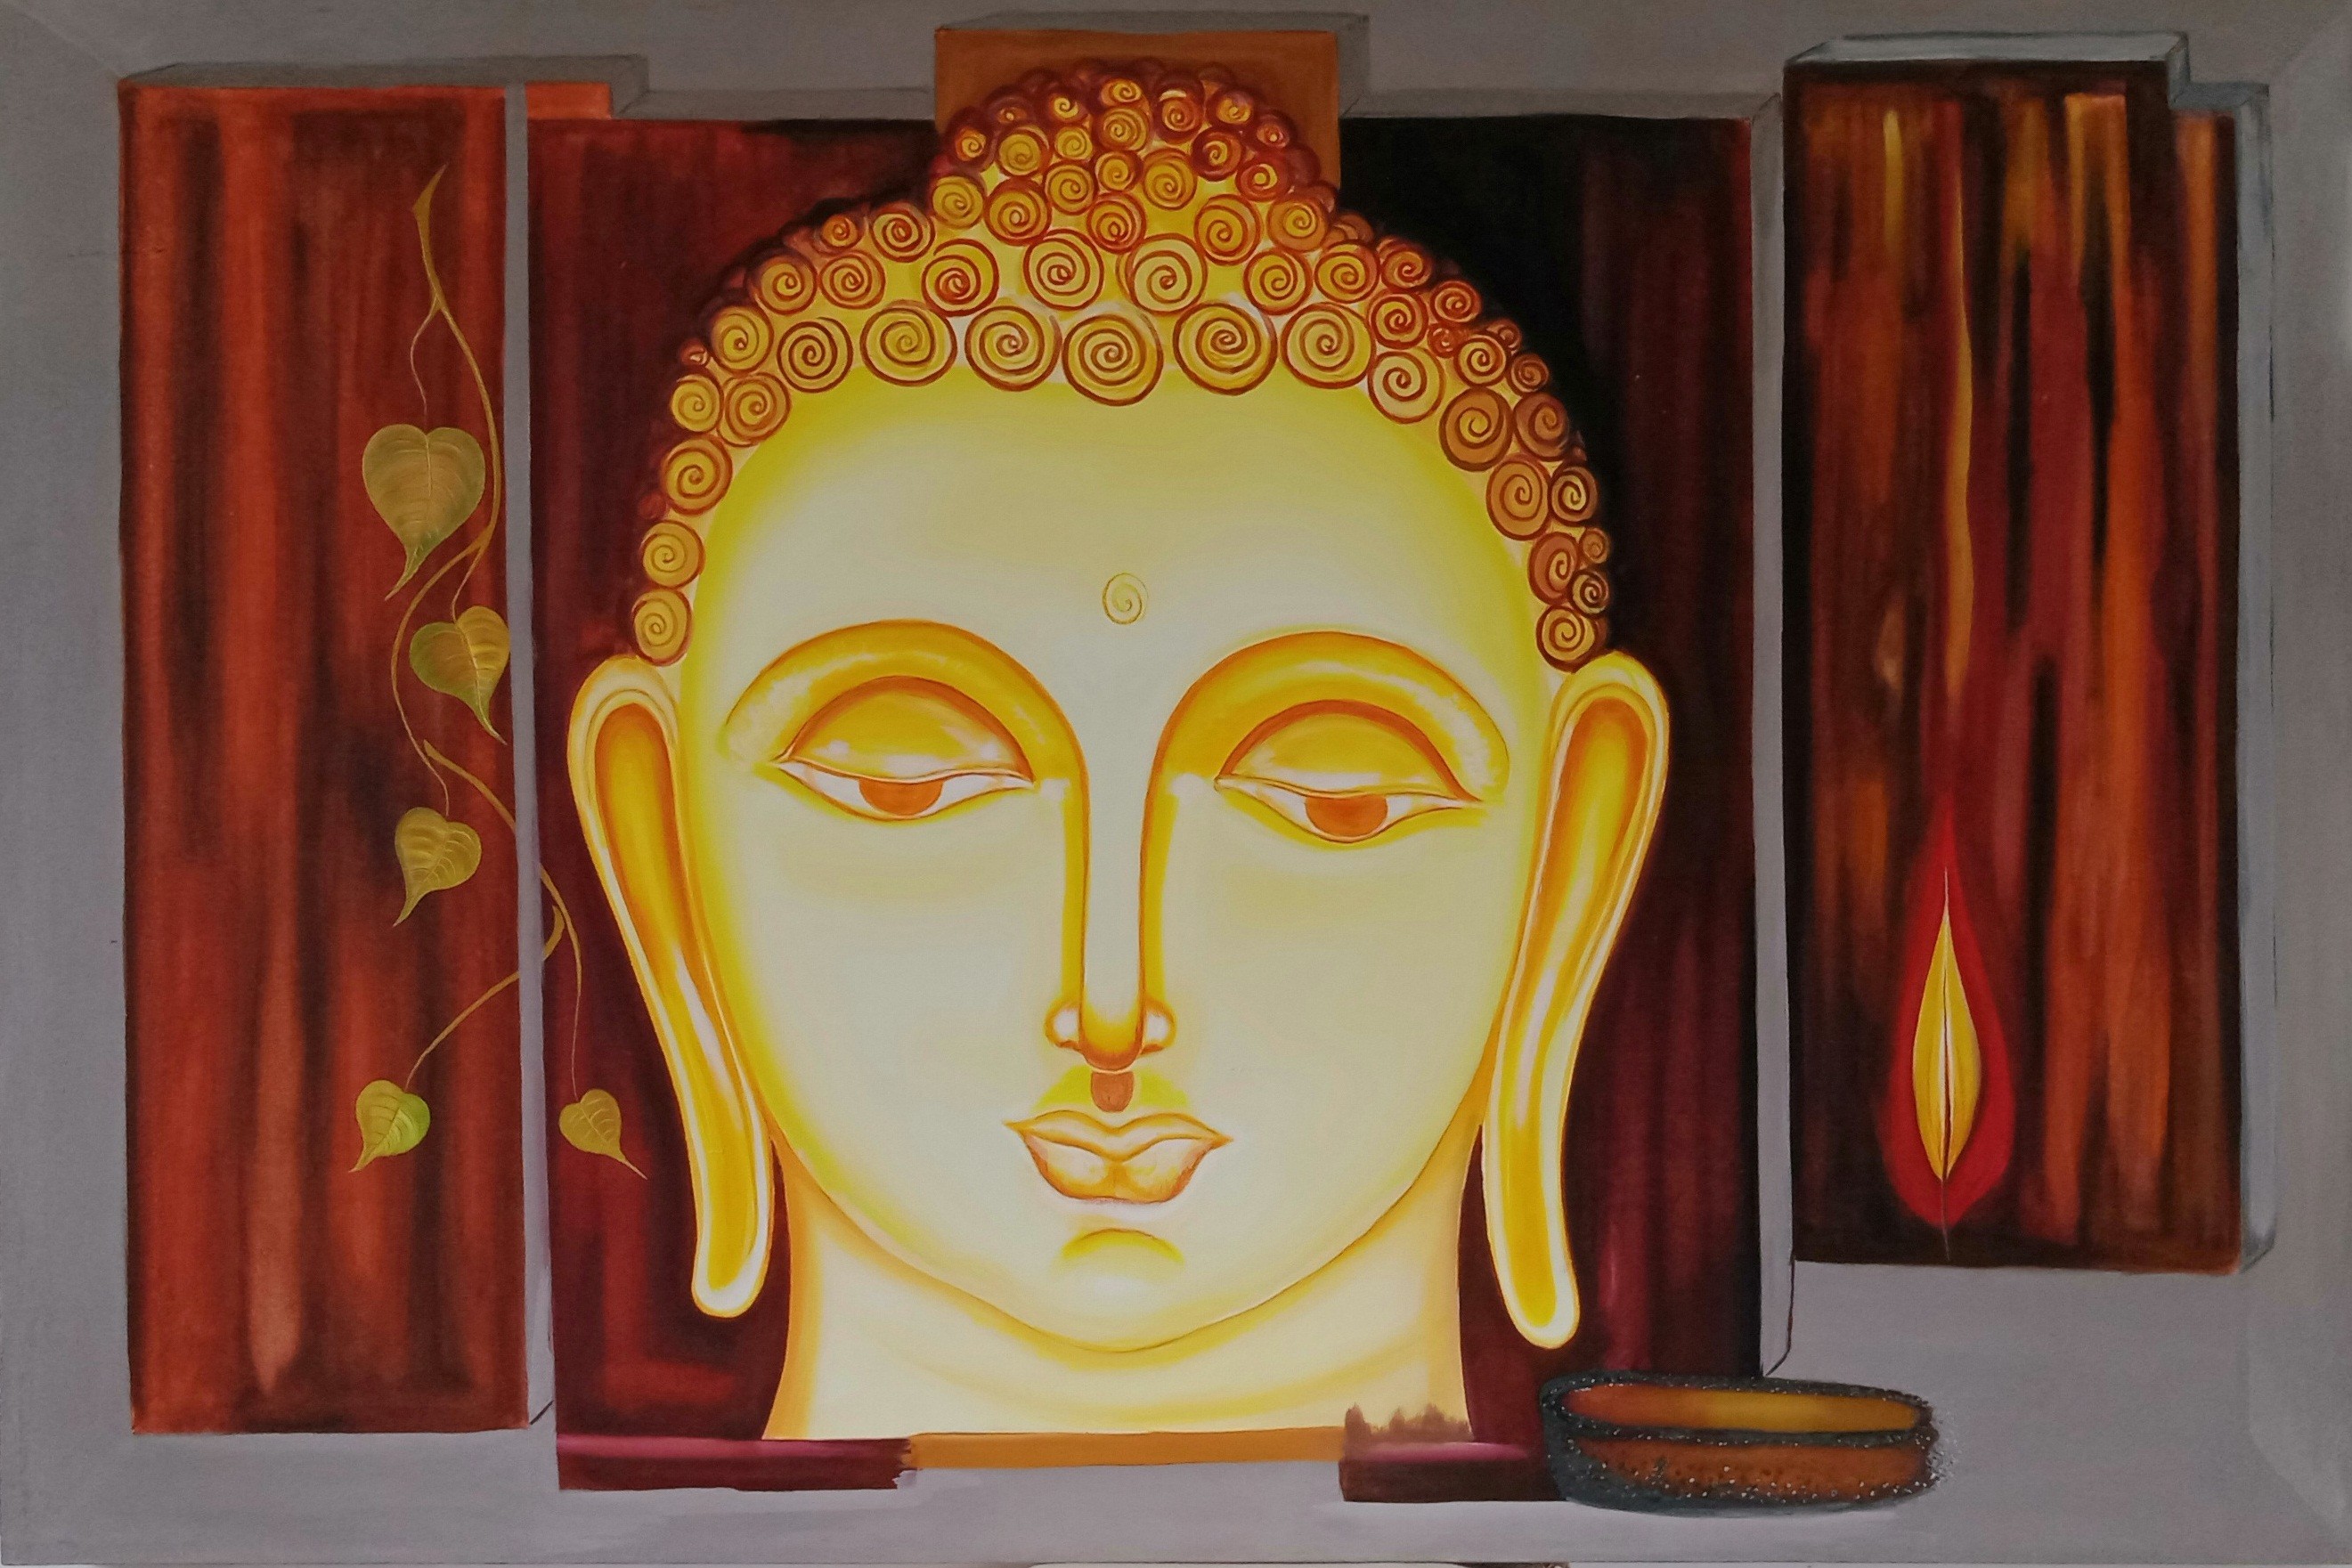 The Lord Buddha by Madhawa Chandraratne